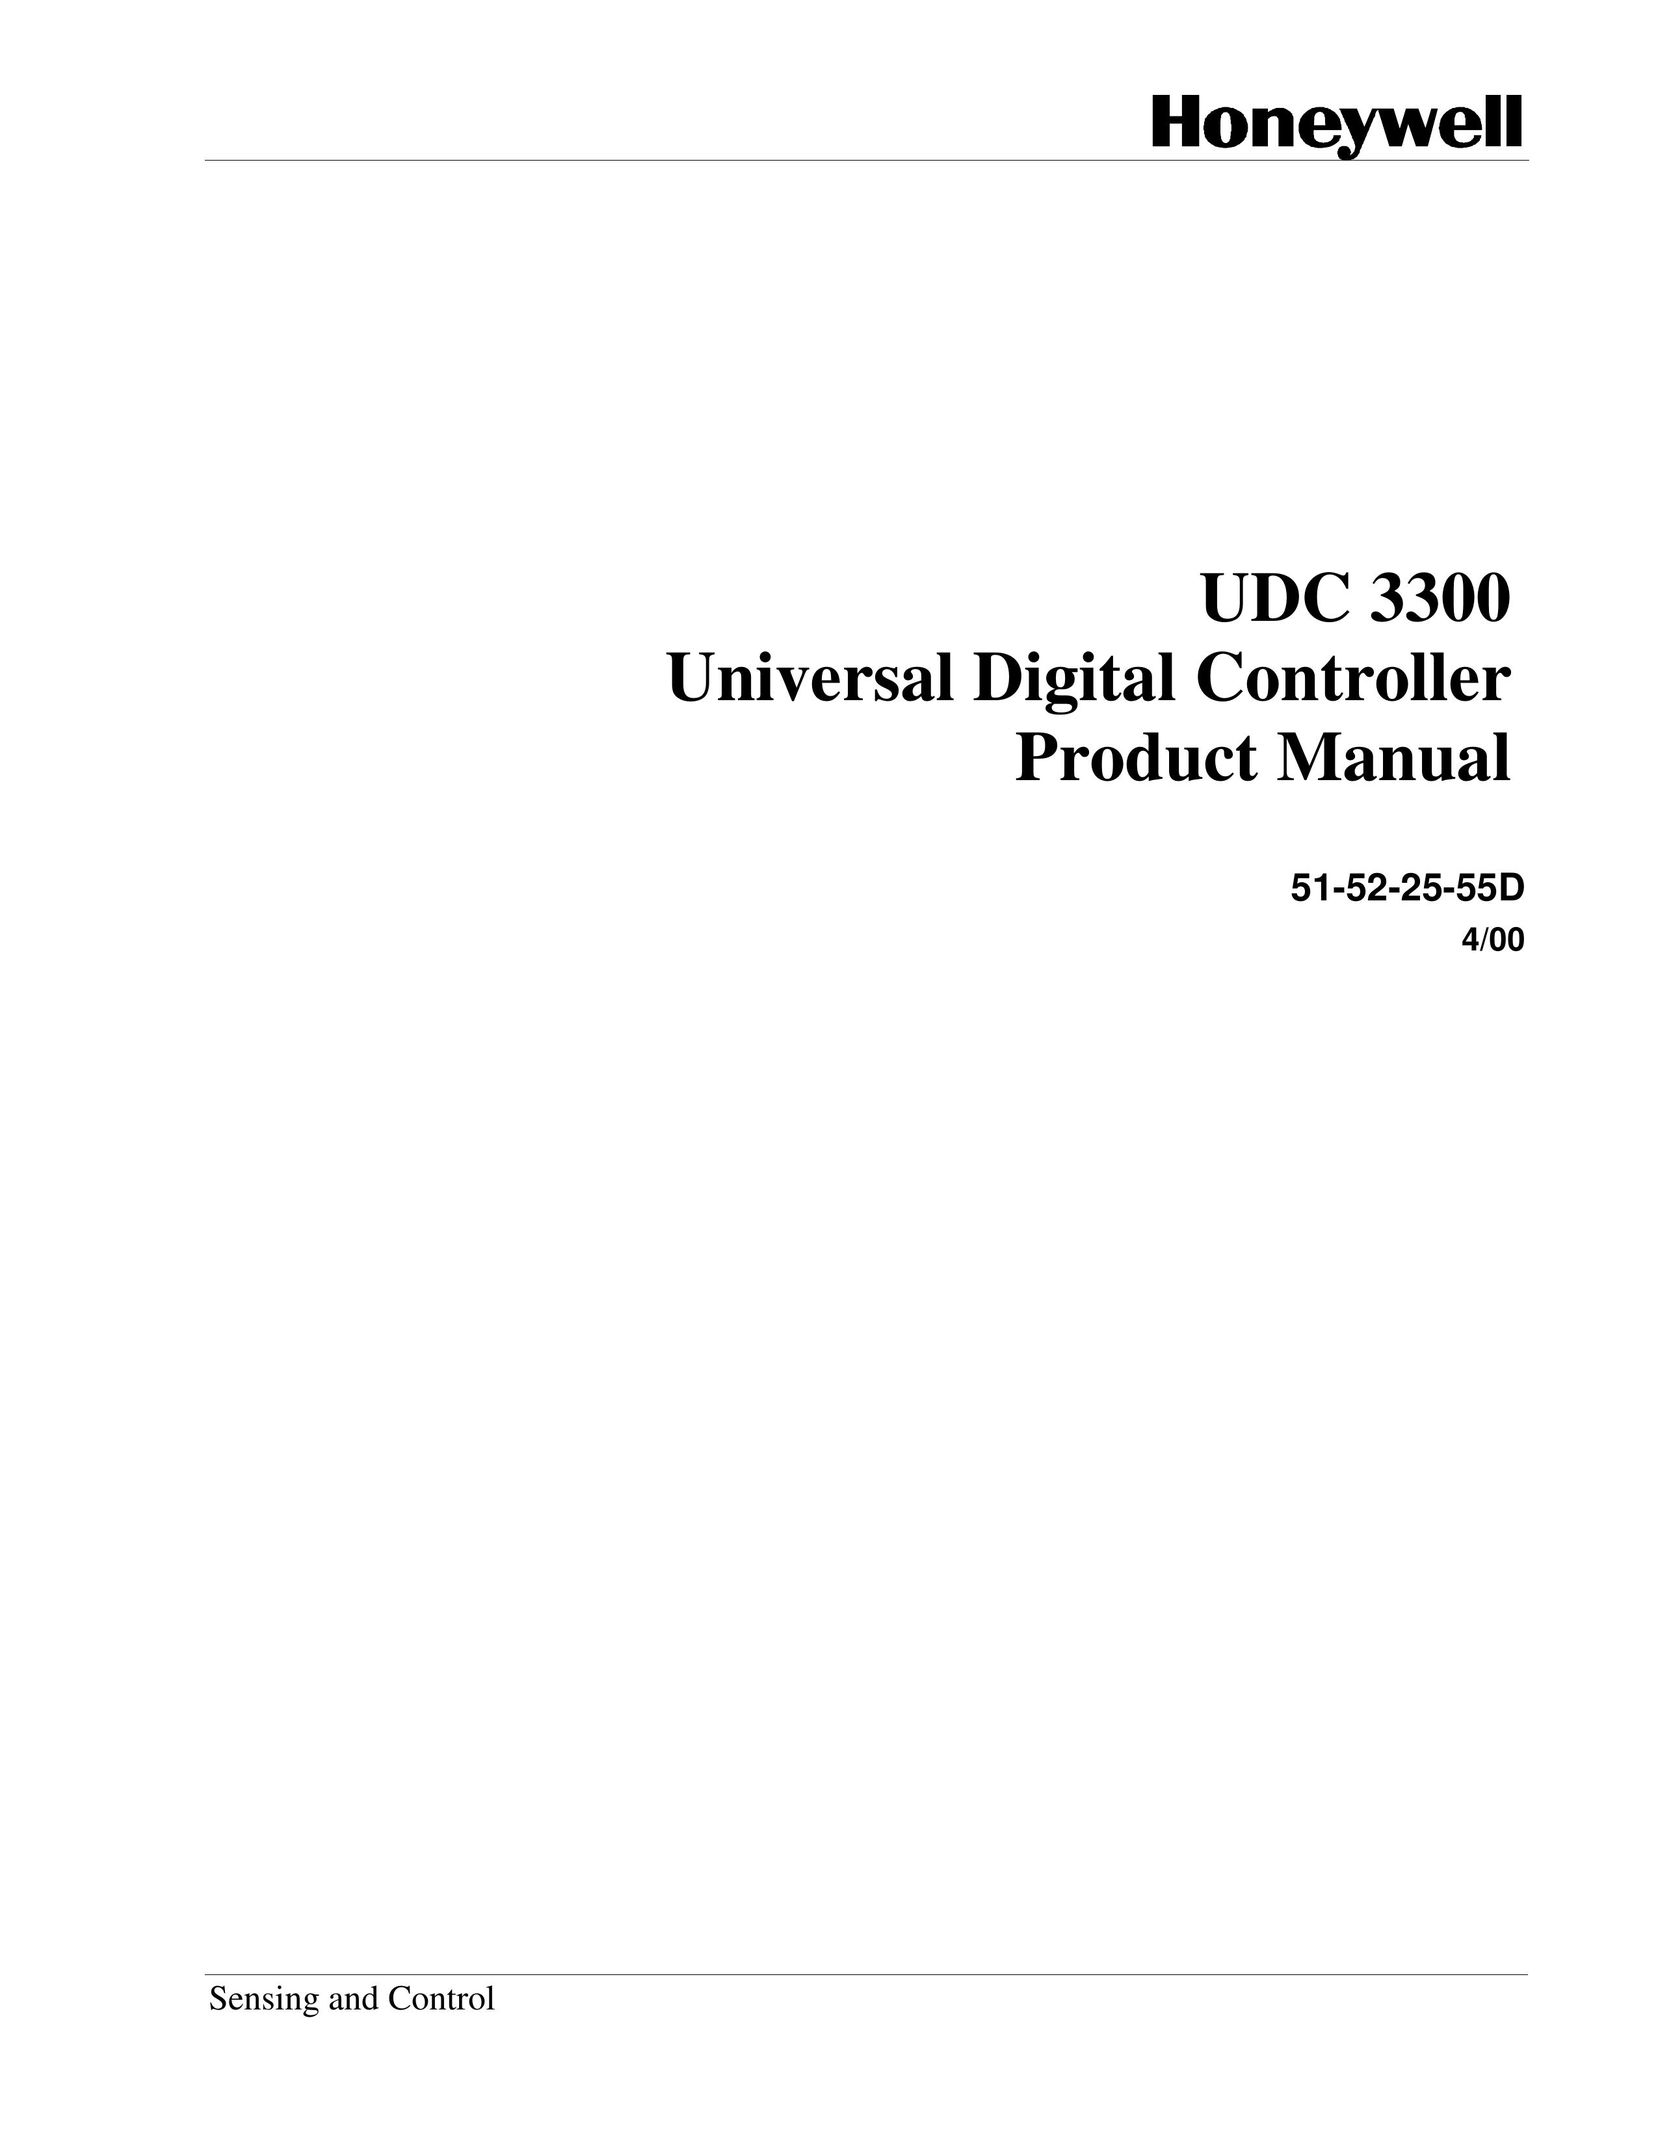 Honeywell UDC 3300 Universal Remote User Manual